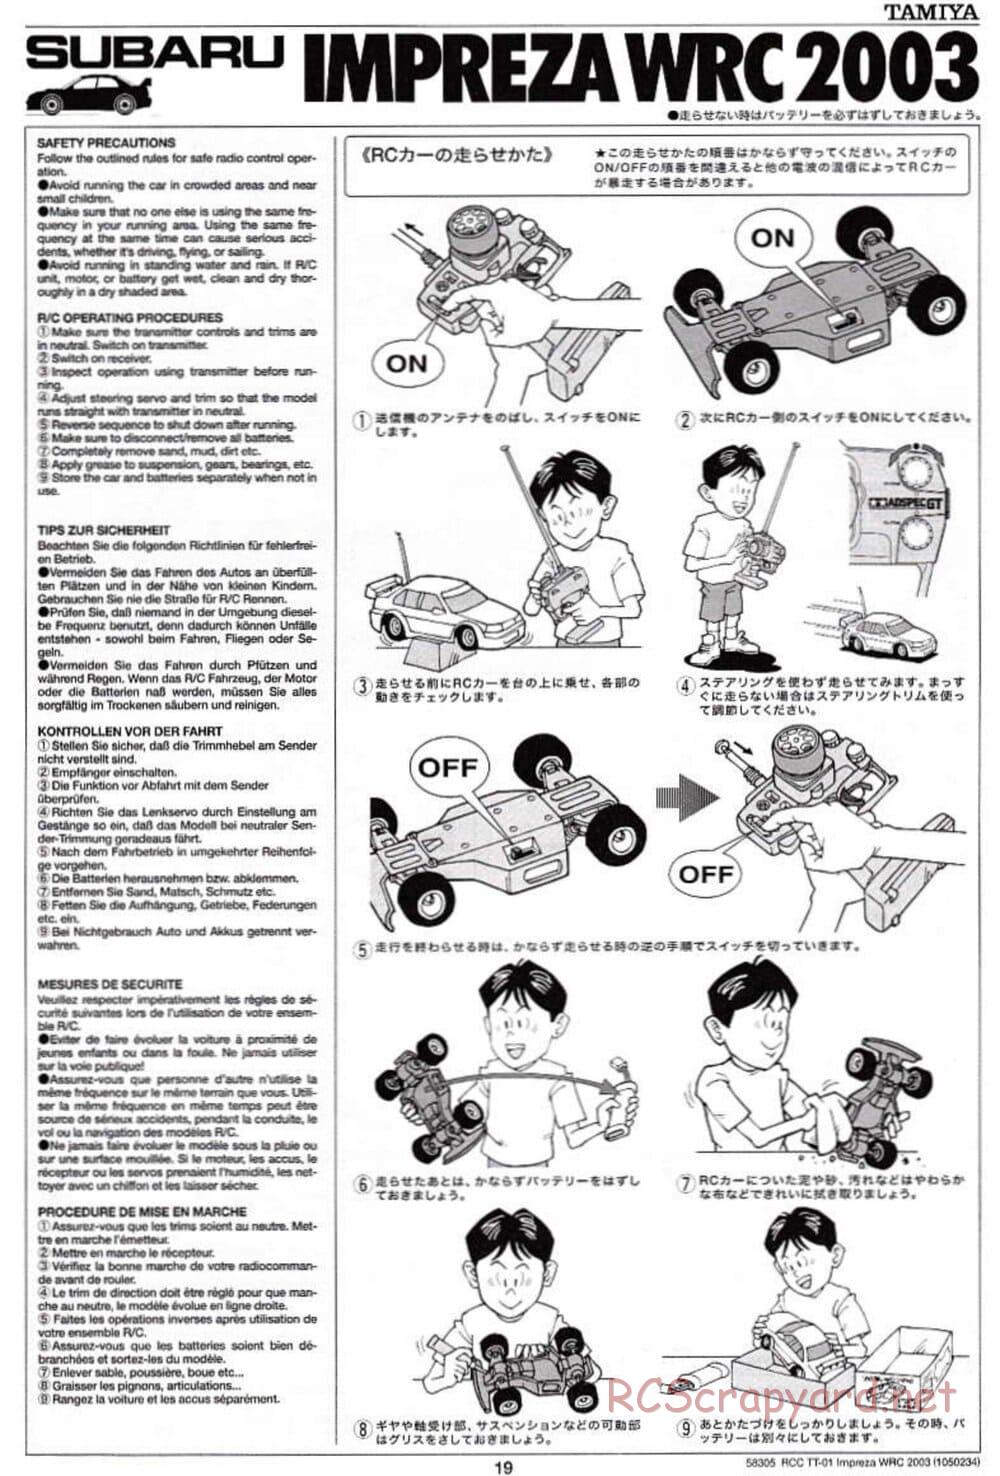 Tamiya - Subaru Impreza WRC 2003 - TT-01 Chassis - Manual - Page 19